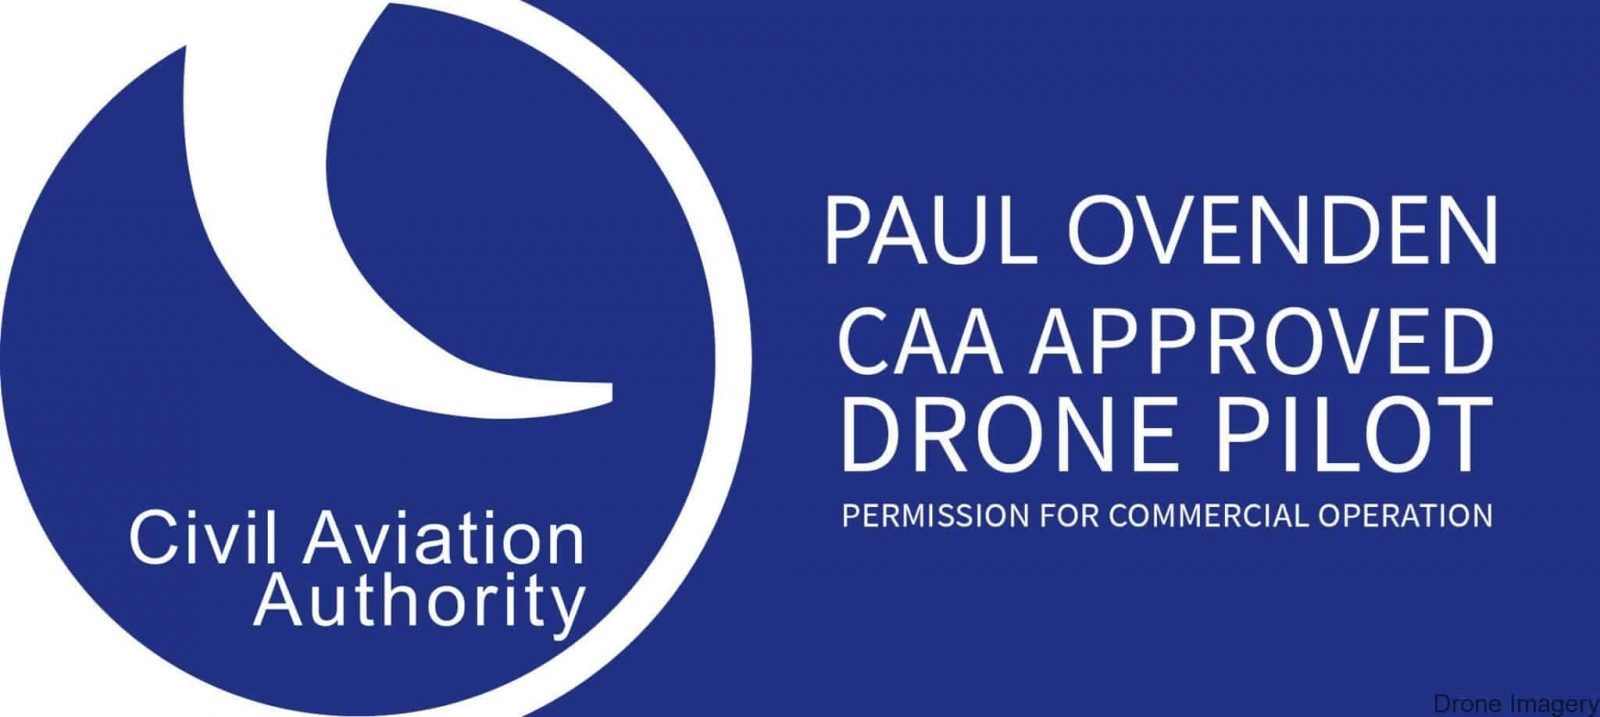 Caa-Approved-UAS-UAV-DRONE-Pilot-Paul Ovenden